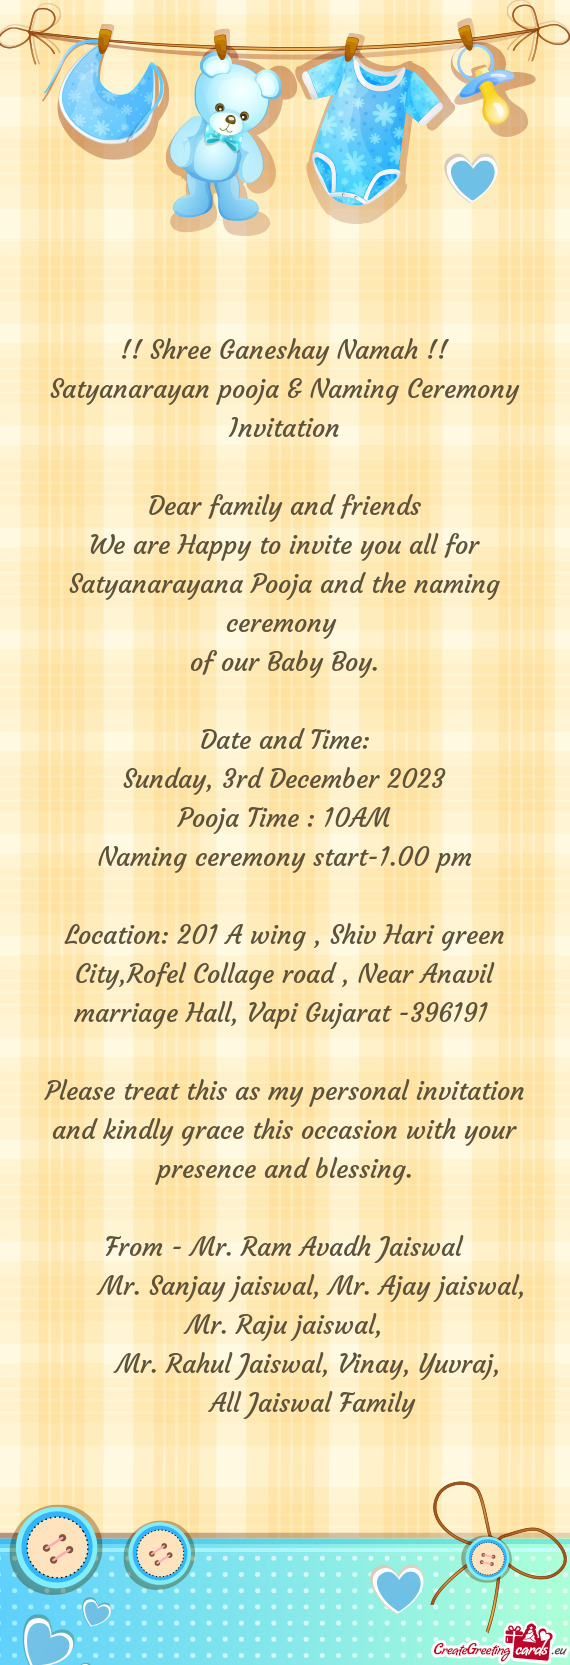 Naming ceremony start-1.00 pm